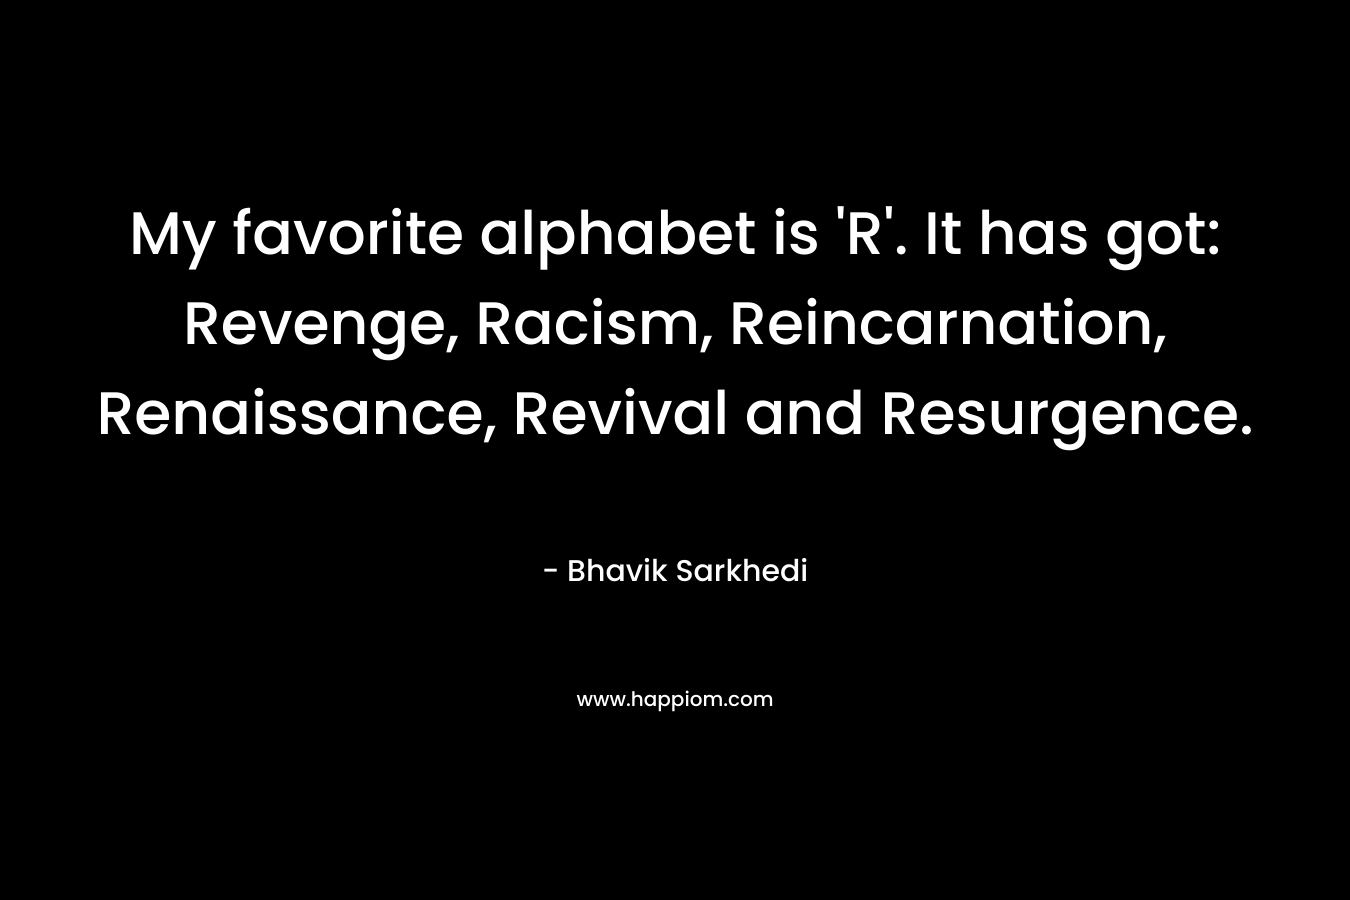 My favorite alphabet is ‘R’. It has got: Revenge, Racism, Reincarnation, Renaissance, Revival and Resurgence. – Bhavik Sarkhedi